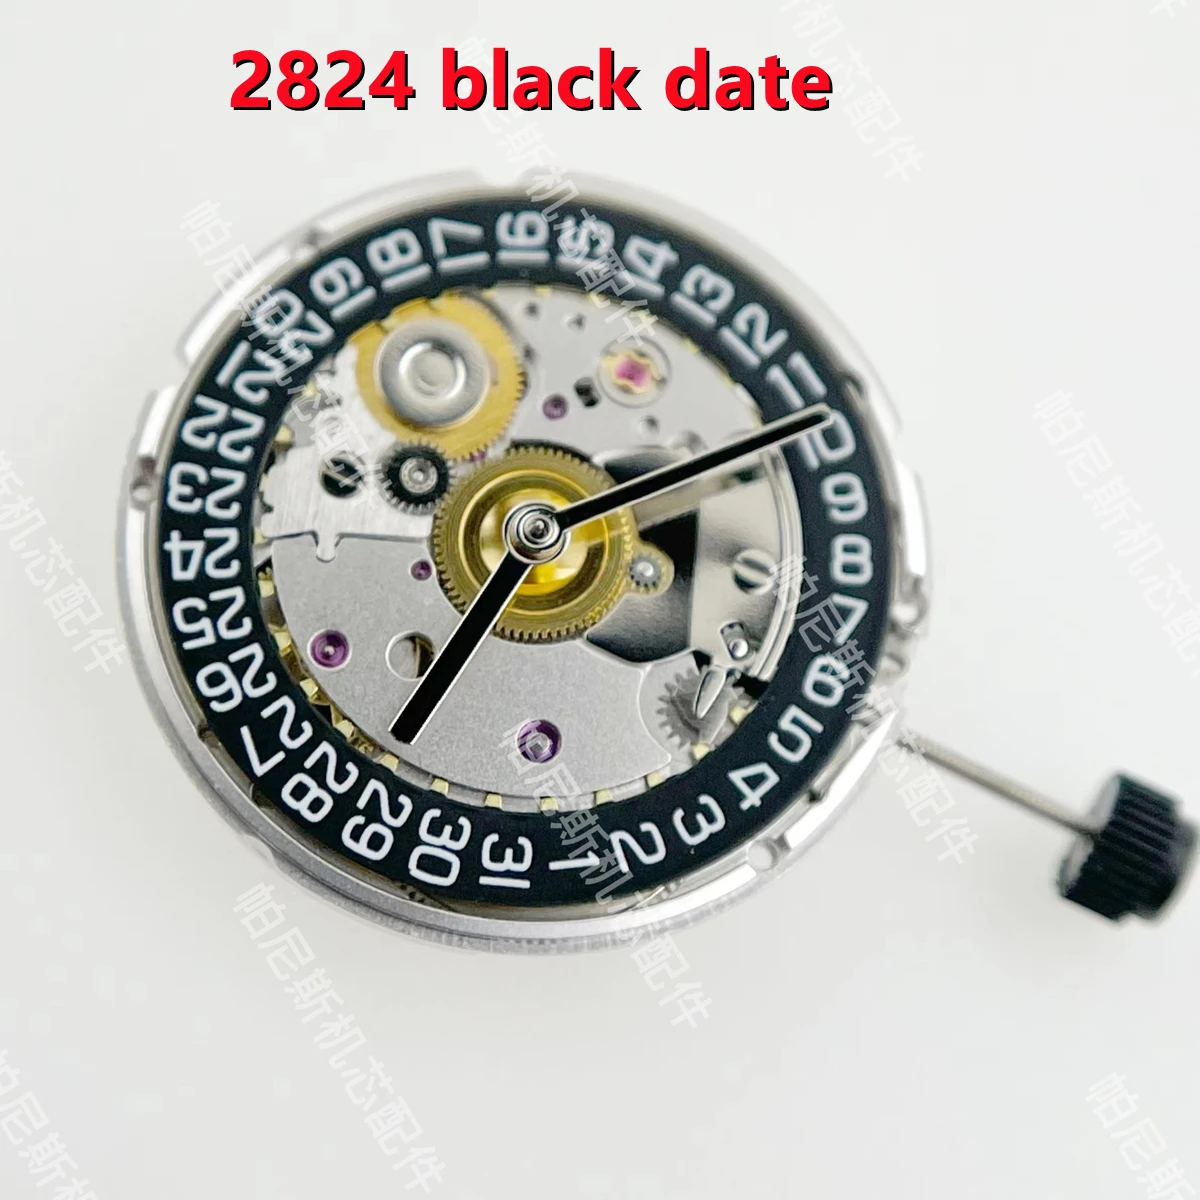 

China ST2130 Automatic Movement Clone Replacement For ETA 2824-2 SELLITA 2824 black date Mechanical Wristwatch Clock Movement